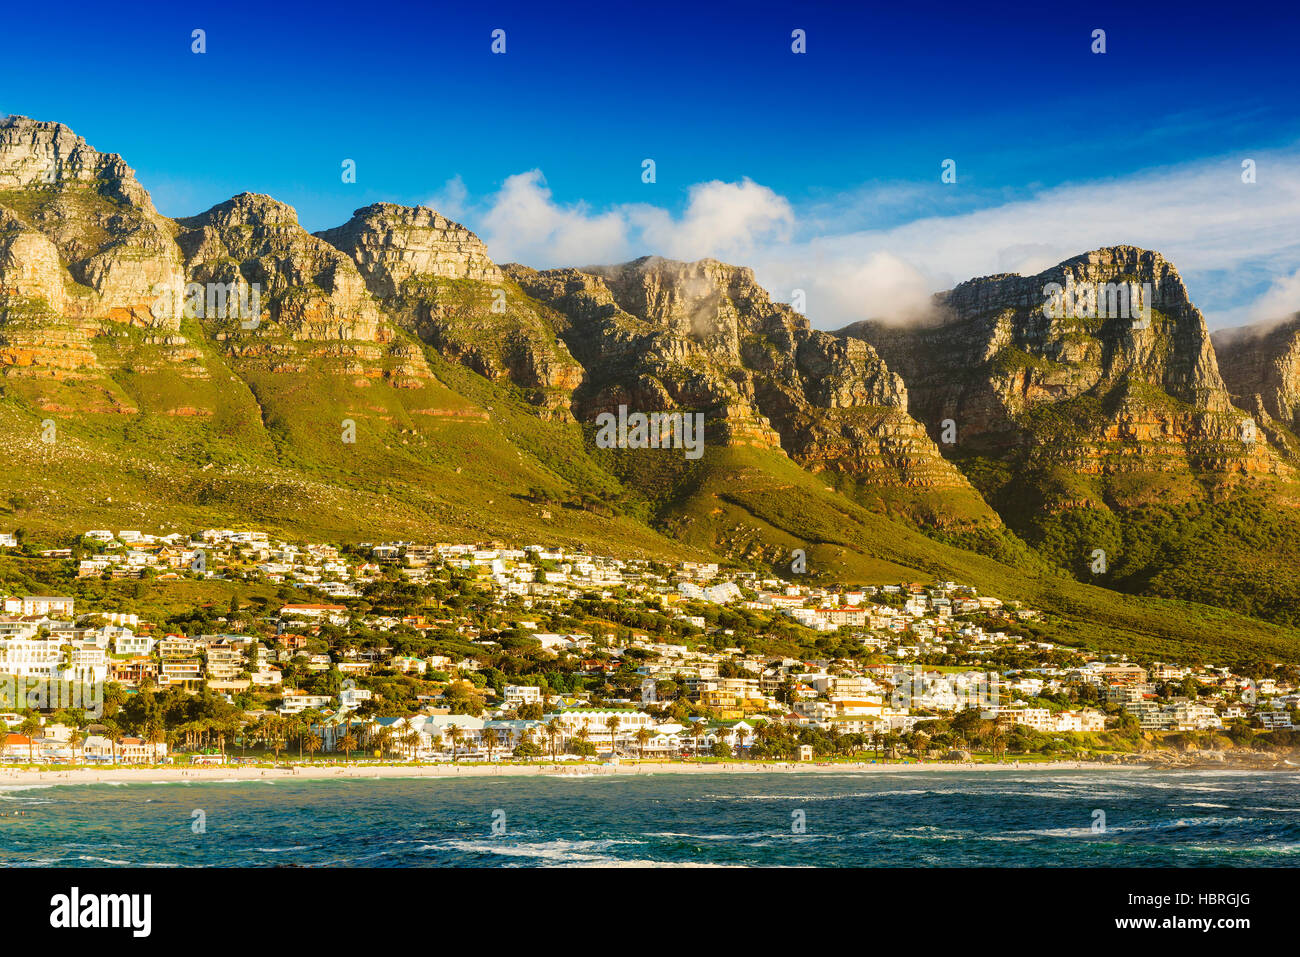 Die zwölf Apostel in Kapstadt, Südafrika Stockfoto